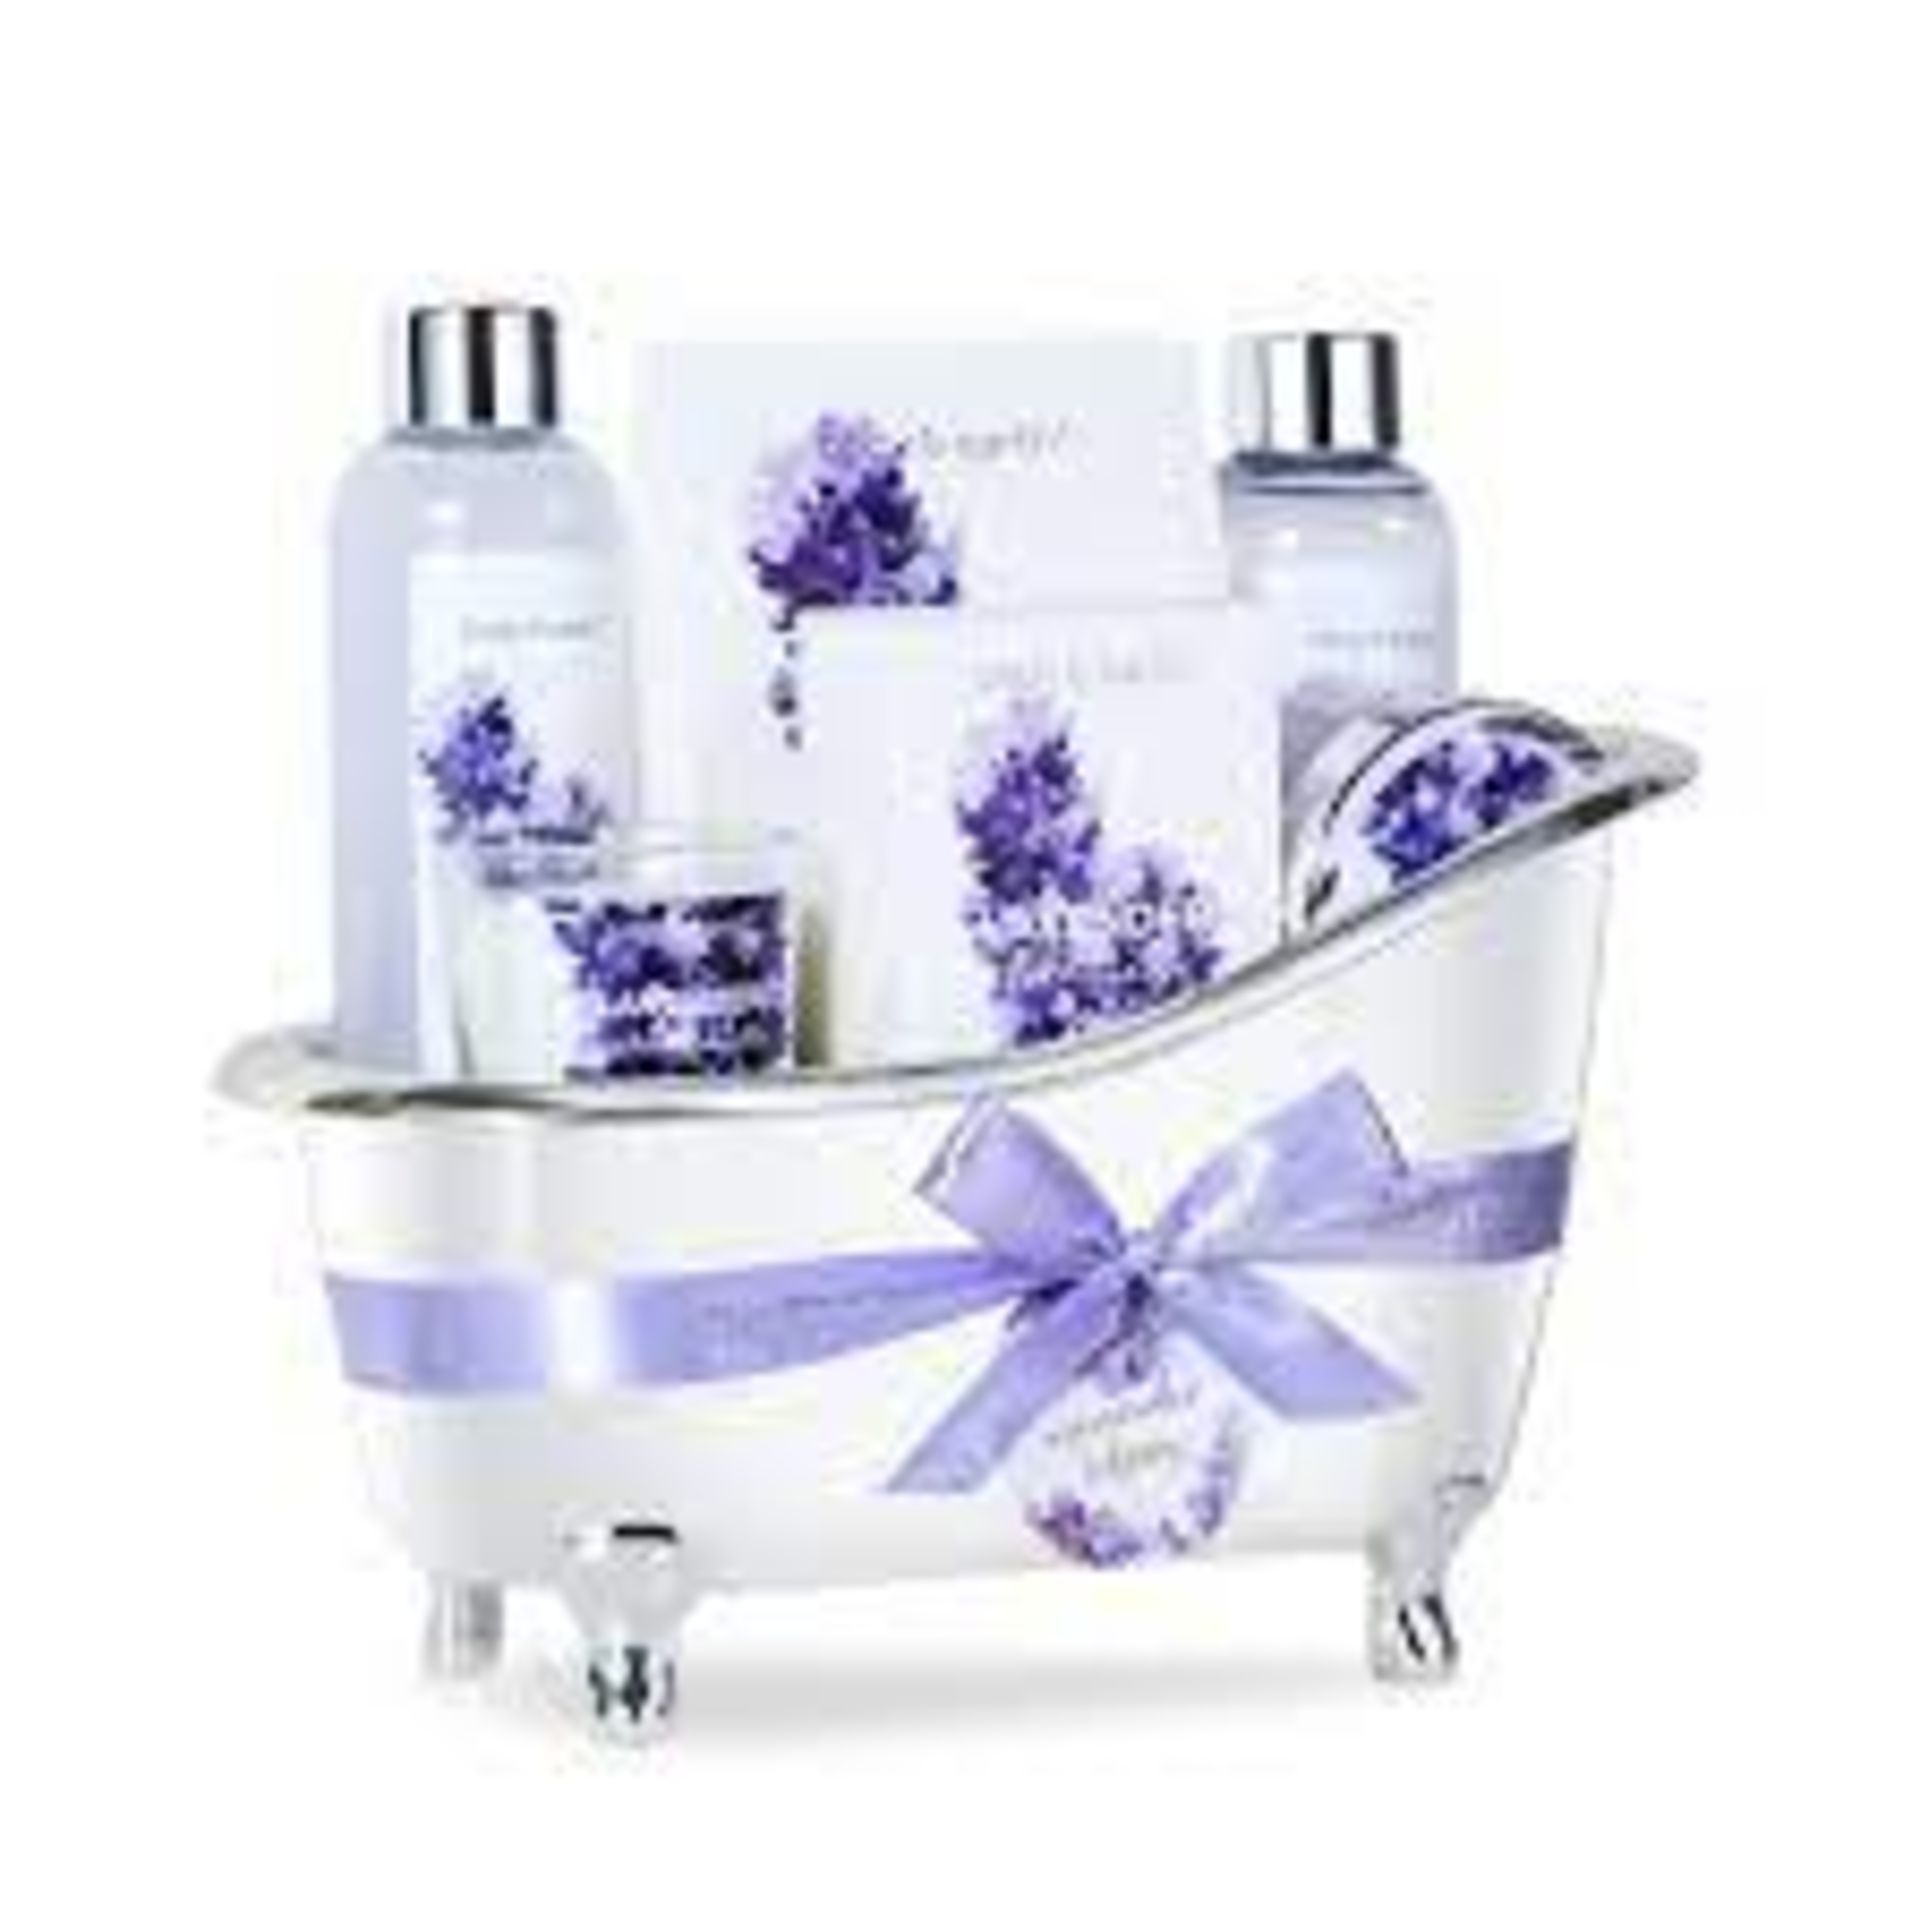 8 x NEW PACKAGED Lavender Home Spa Bathtub Set. (SKU:BEC-5-NEW). Home Spa Bath Gift Set: Items